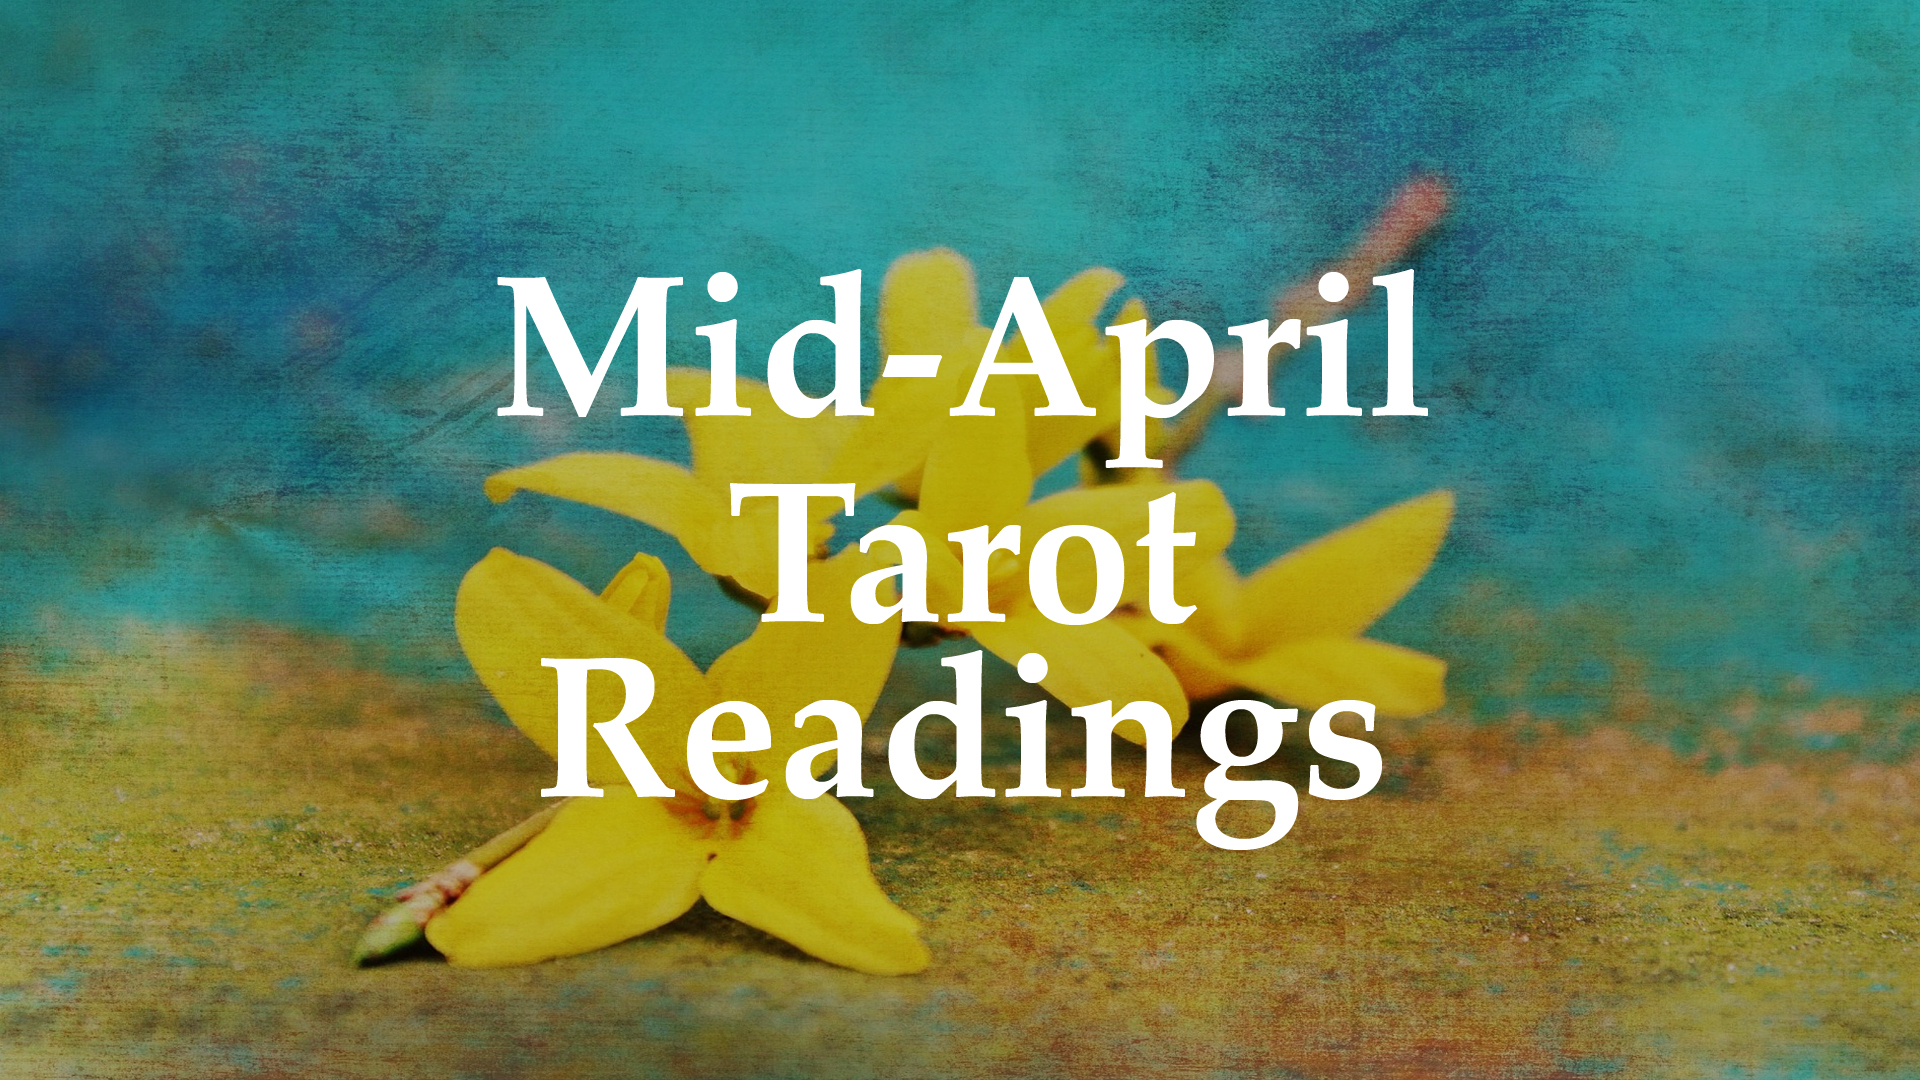 Tarot-Readings-Mid-April